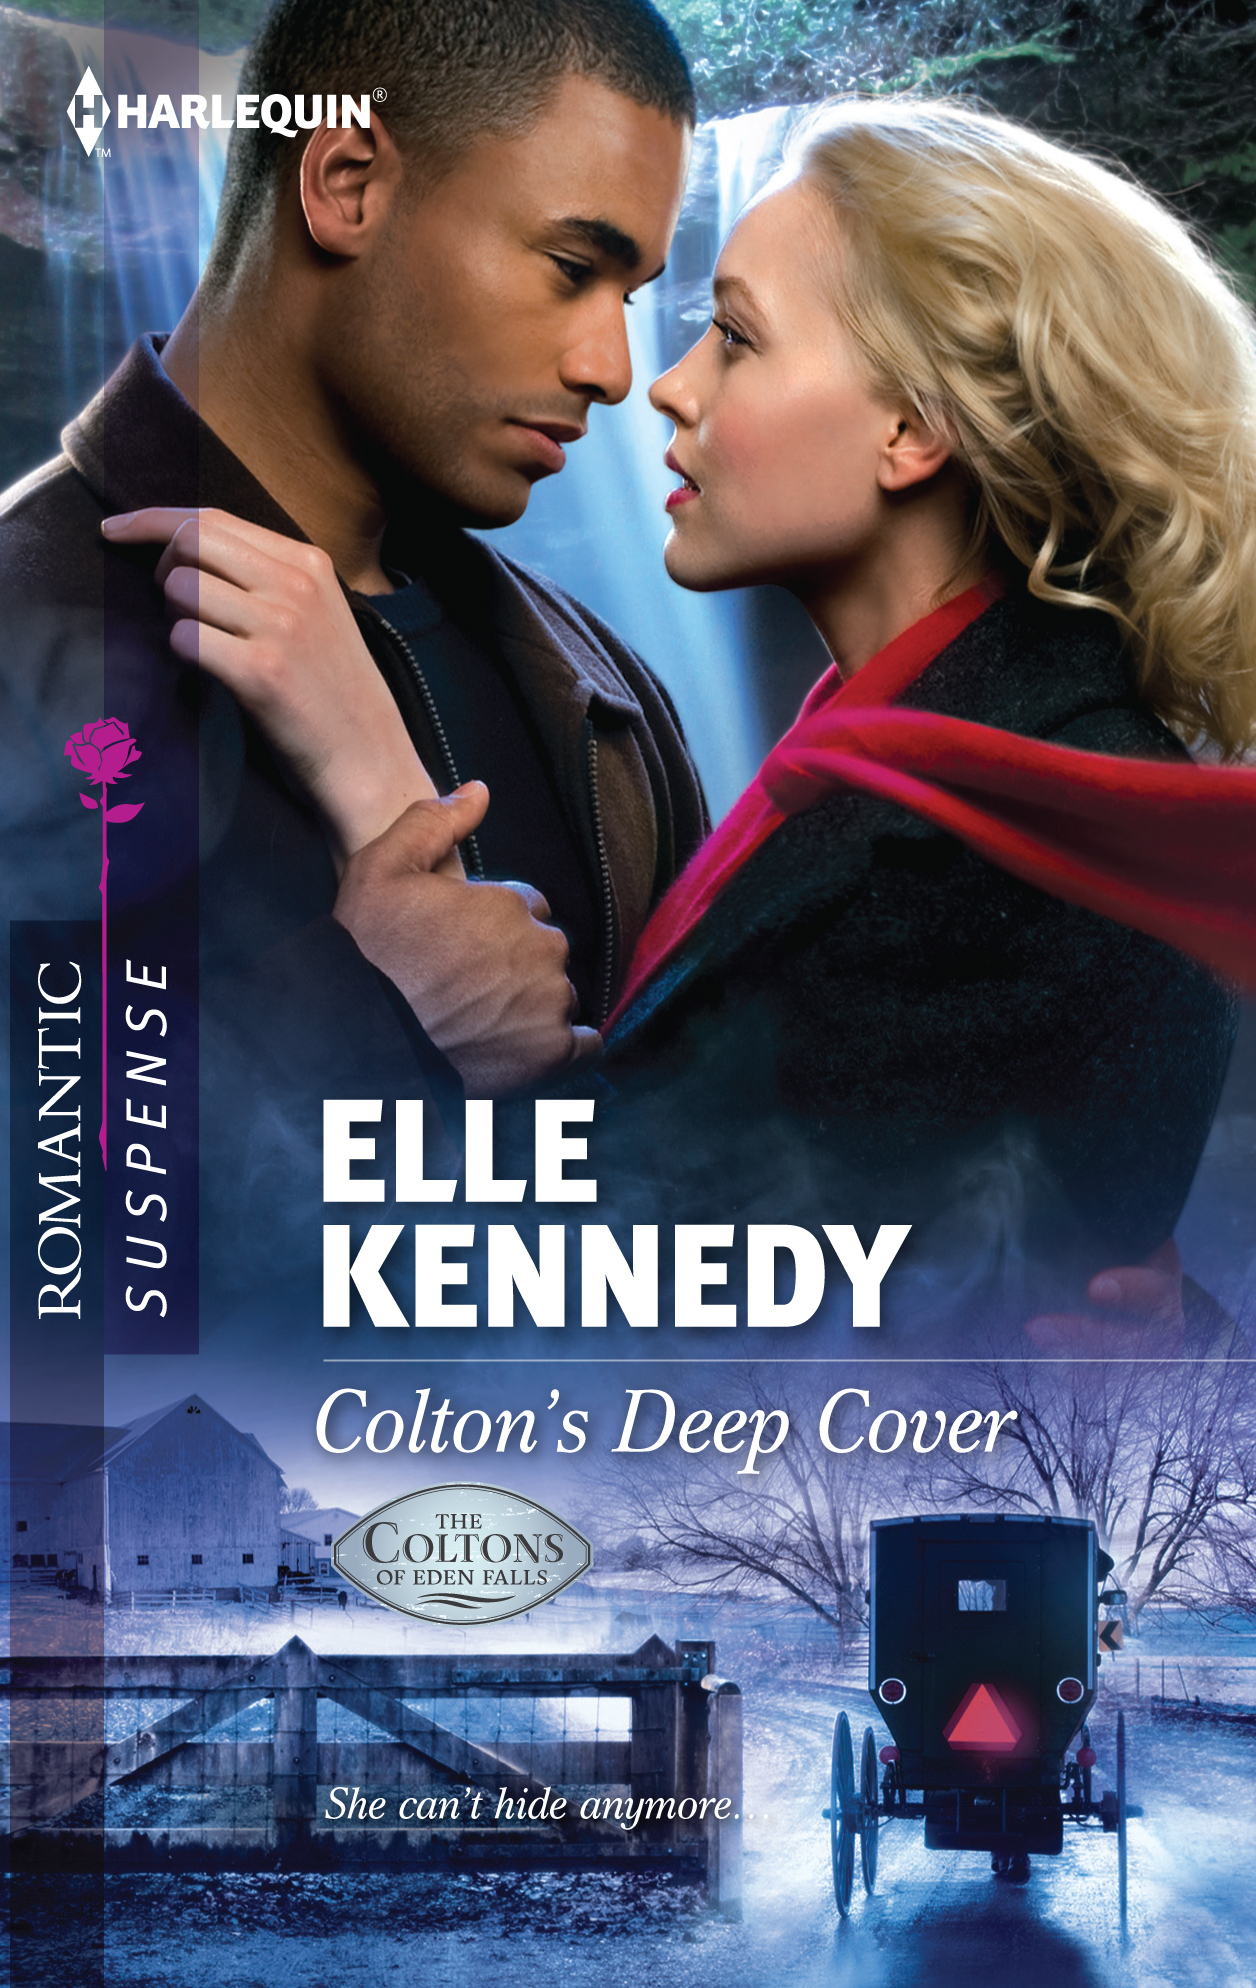 Elle Kennedy Harlequin Romance Book Cover